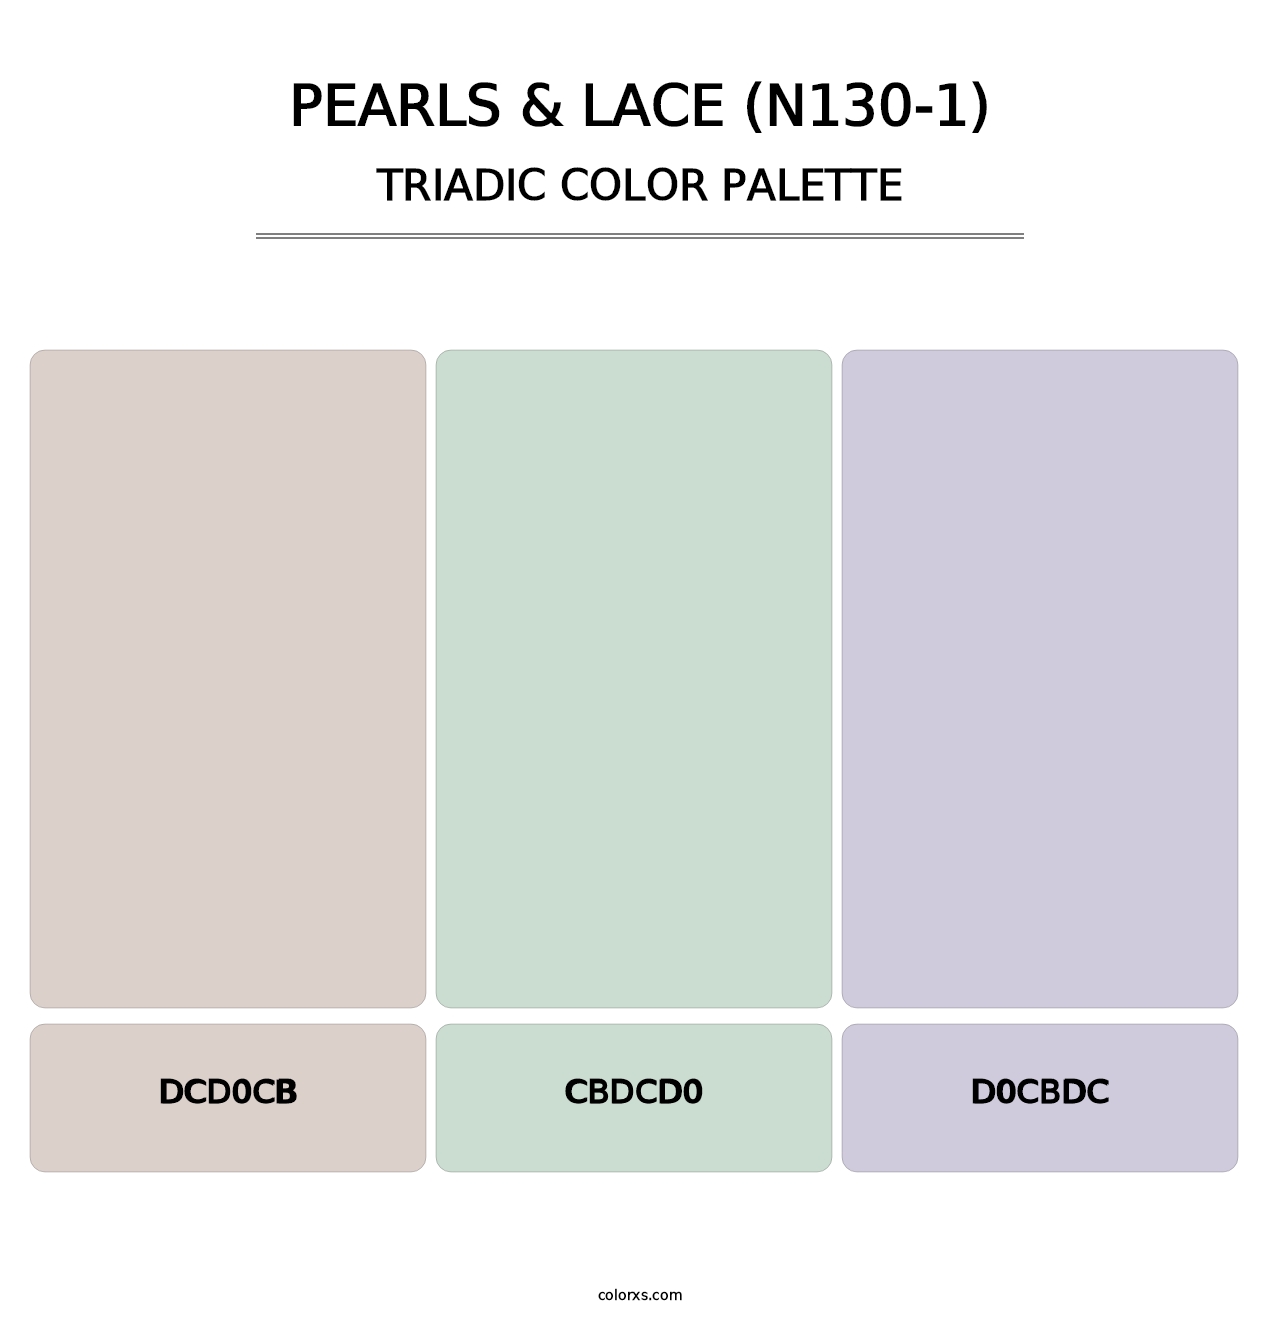 Pearls & Lace (N130-1) - Triadic Color Palette